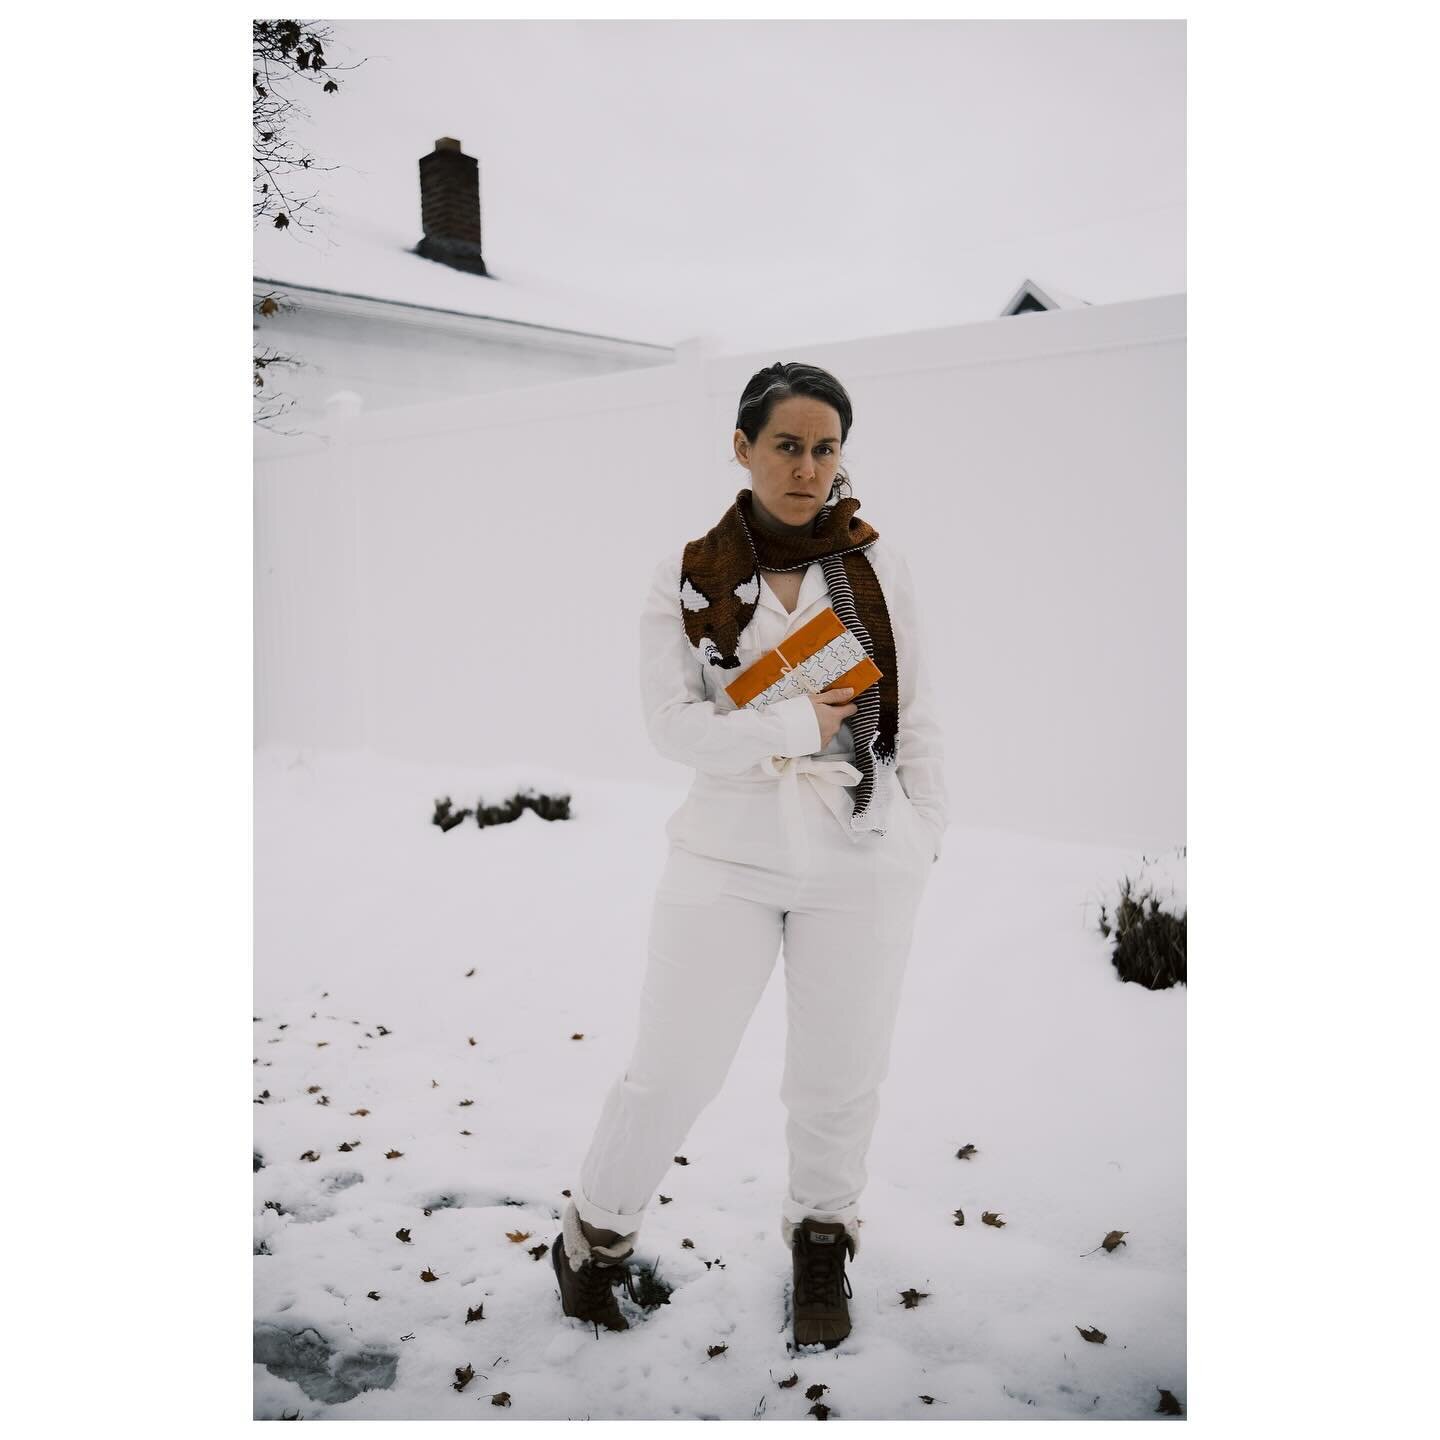 First snow of the season. 
Selinsgrove, PA. 

#fujifilm #fujixt4 #fujixseries #fujixshooters #fujiframez #fujifeed #fujilovers #fujifilm_xseries #portraitphotography #portrait #wintervibes #winteraesthetic #snowphotography #optoutside #outdoortones #